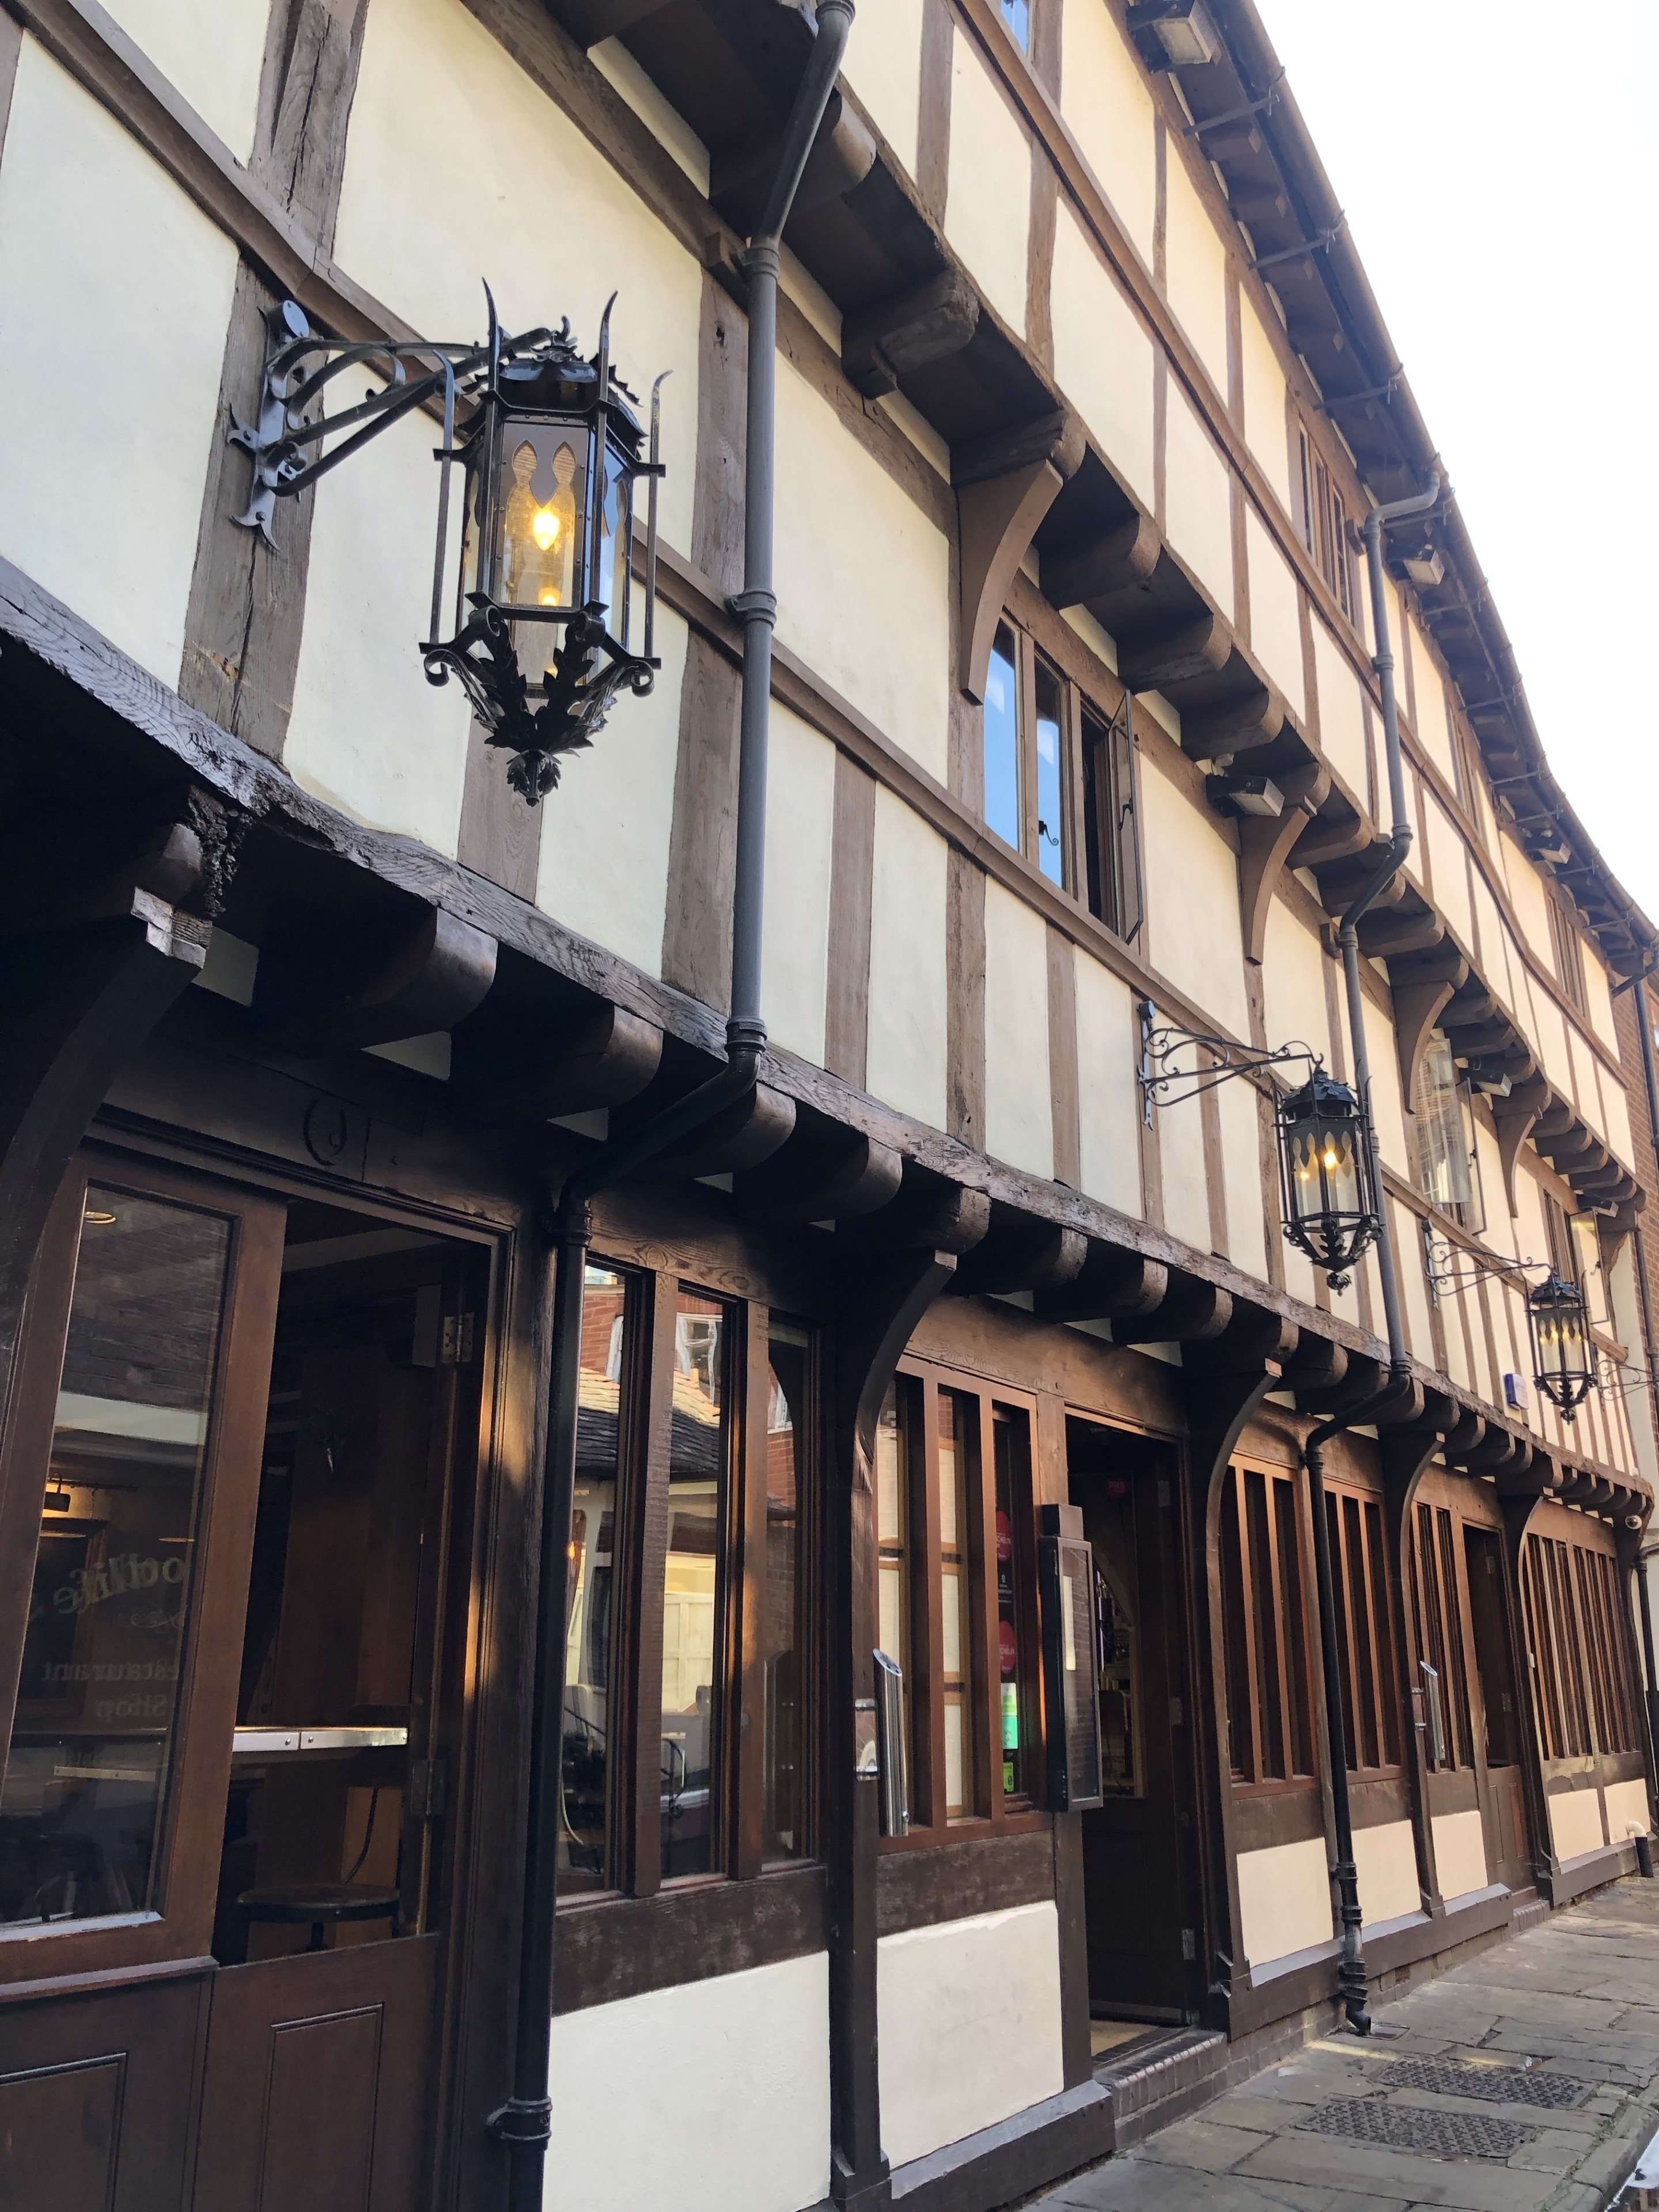 Historical Shrewsbury